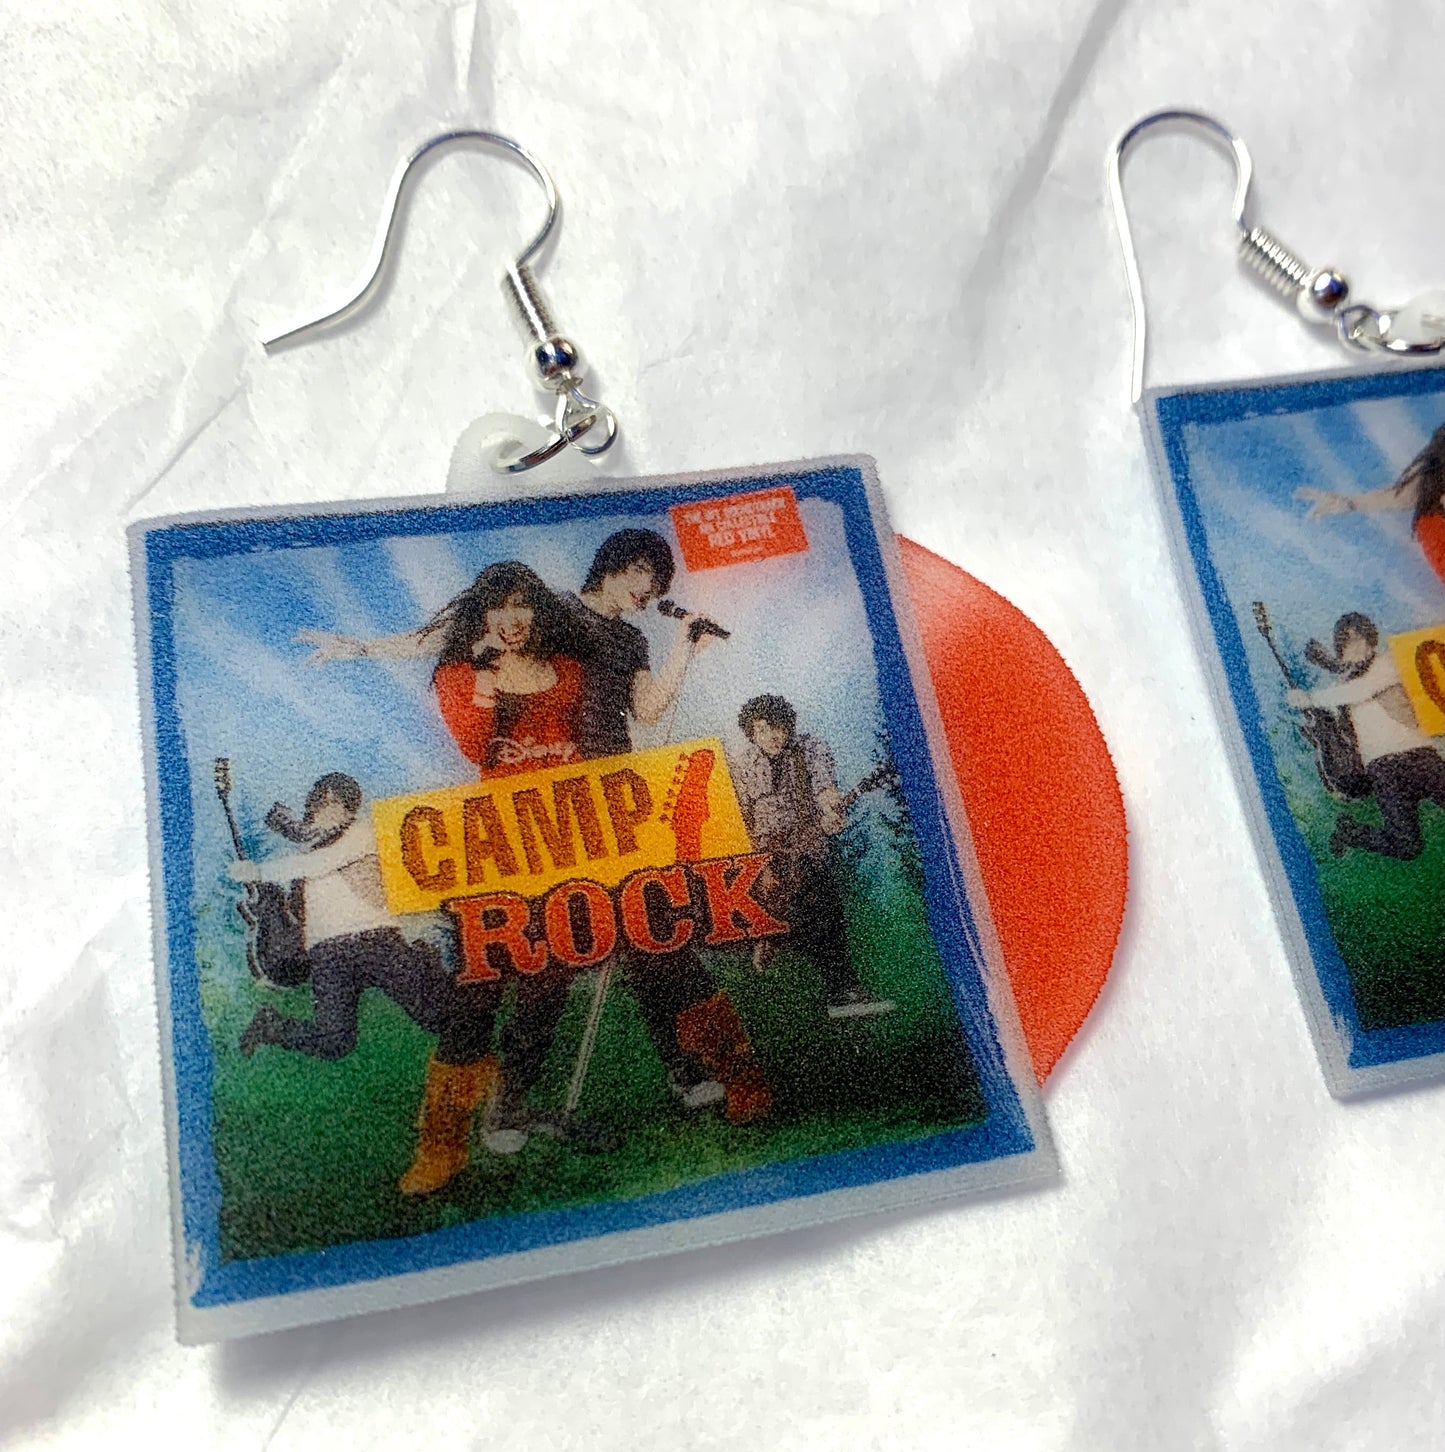 (READY TO SHIP) Camp Rock Movie Soundtrack Vinyl Album Handmade Earrings!